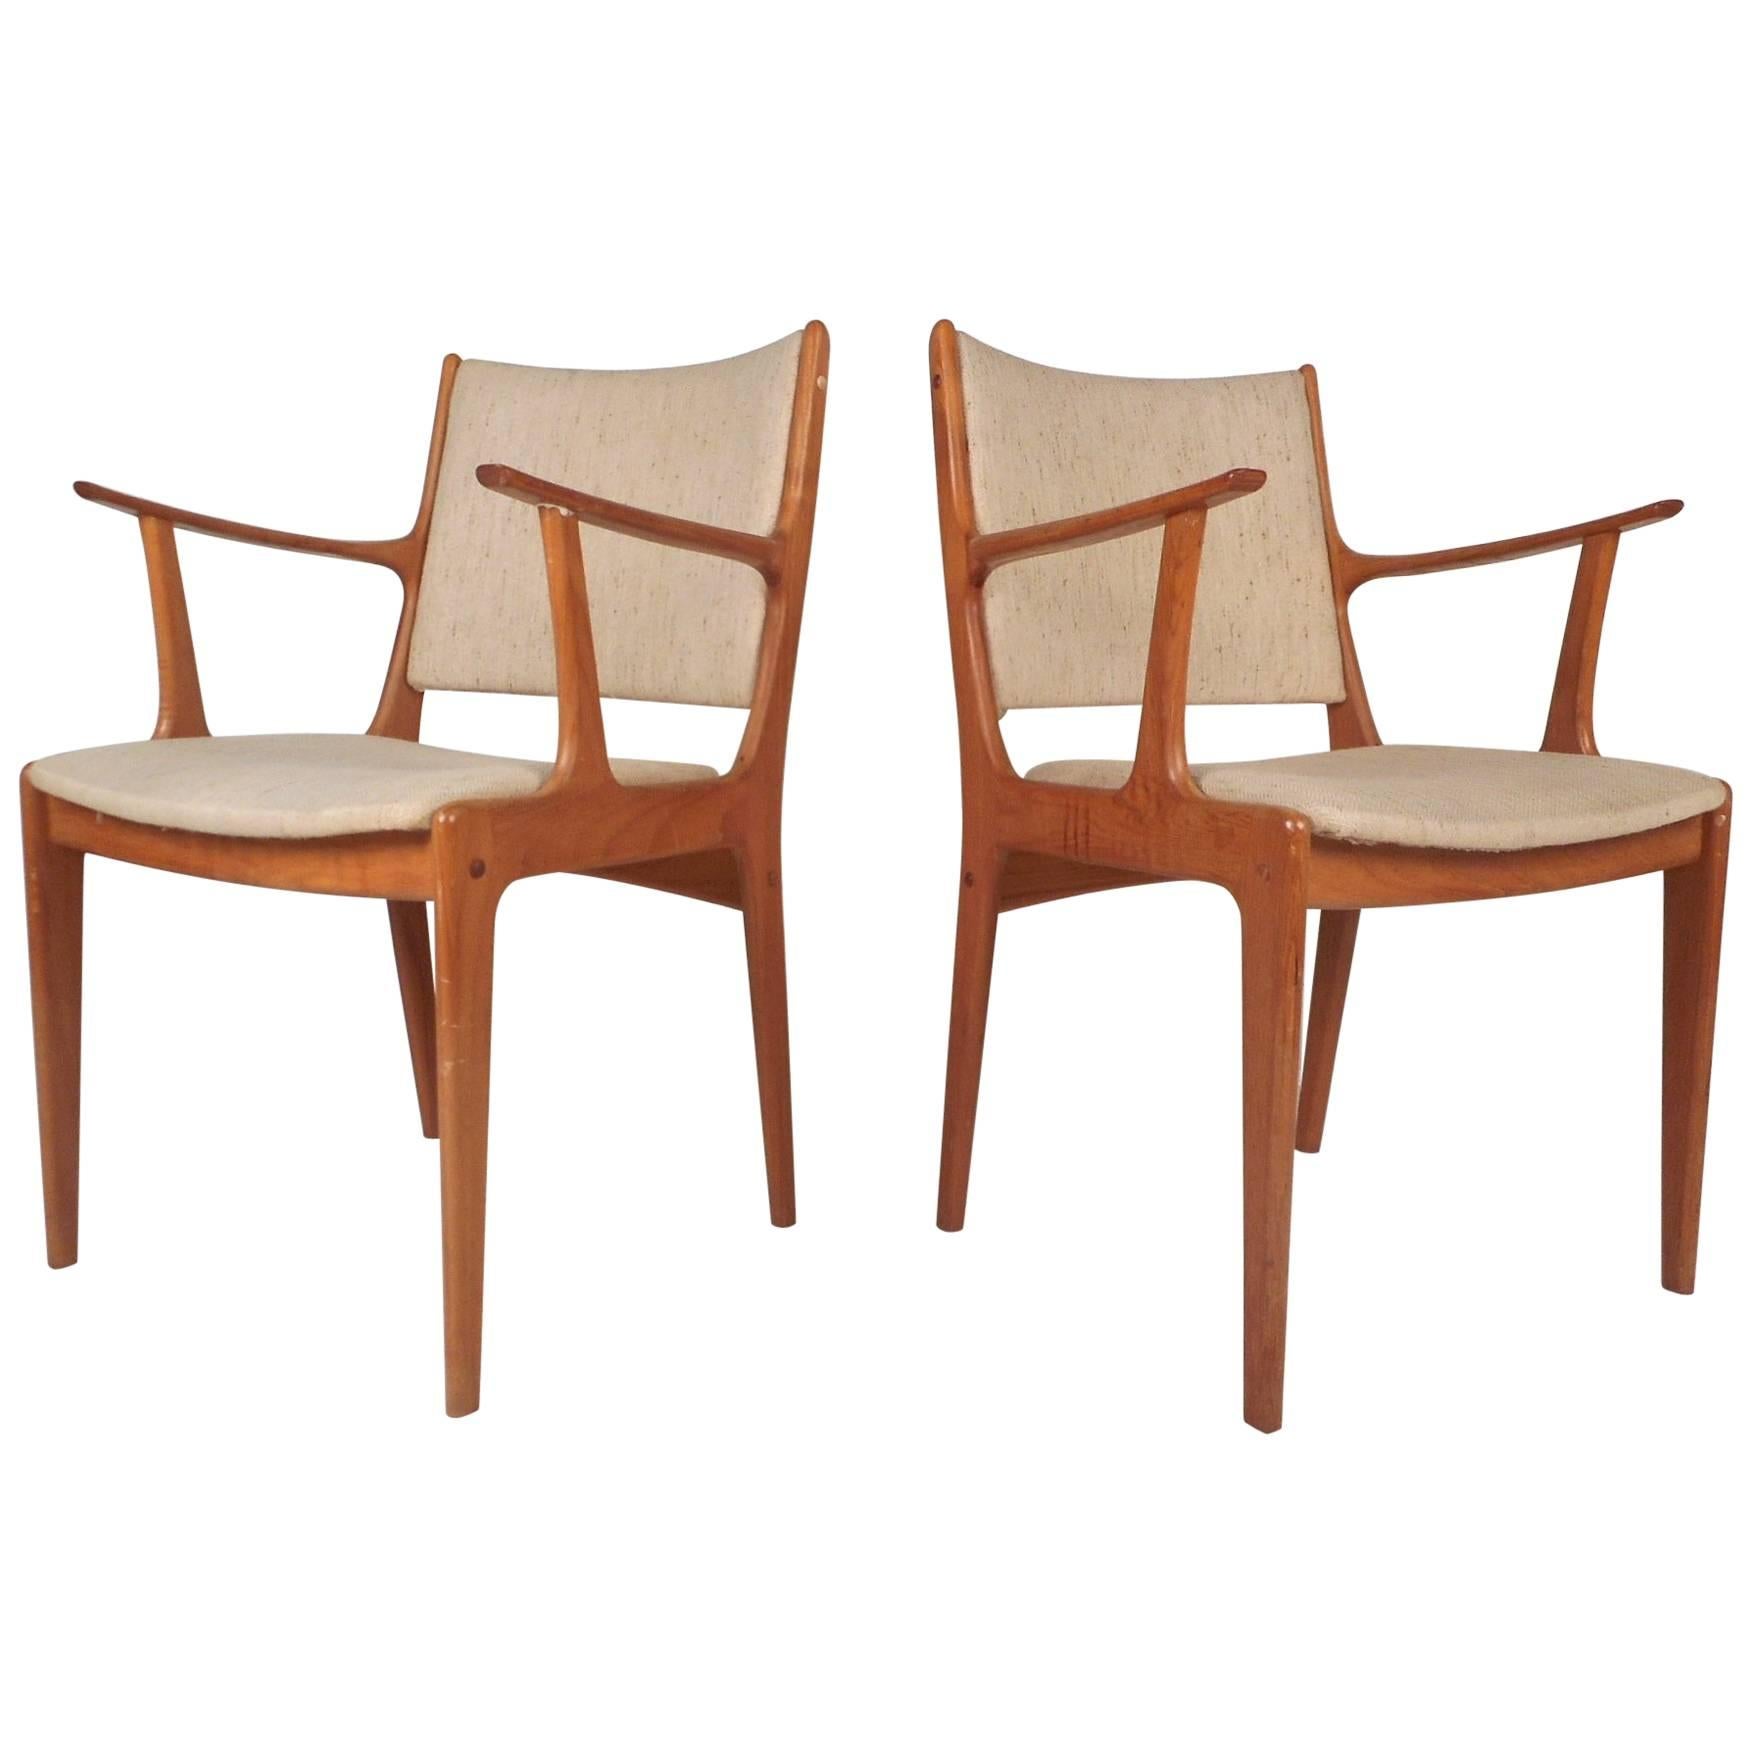 Beautiful Pair of Mid-Century Modern Danish Teak Arm Dining Chairs